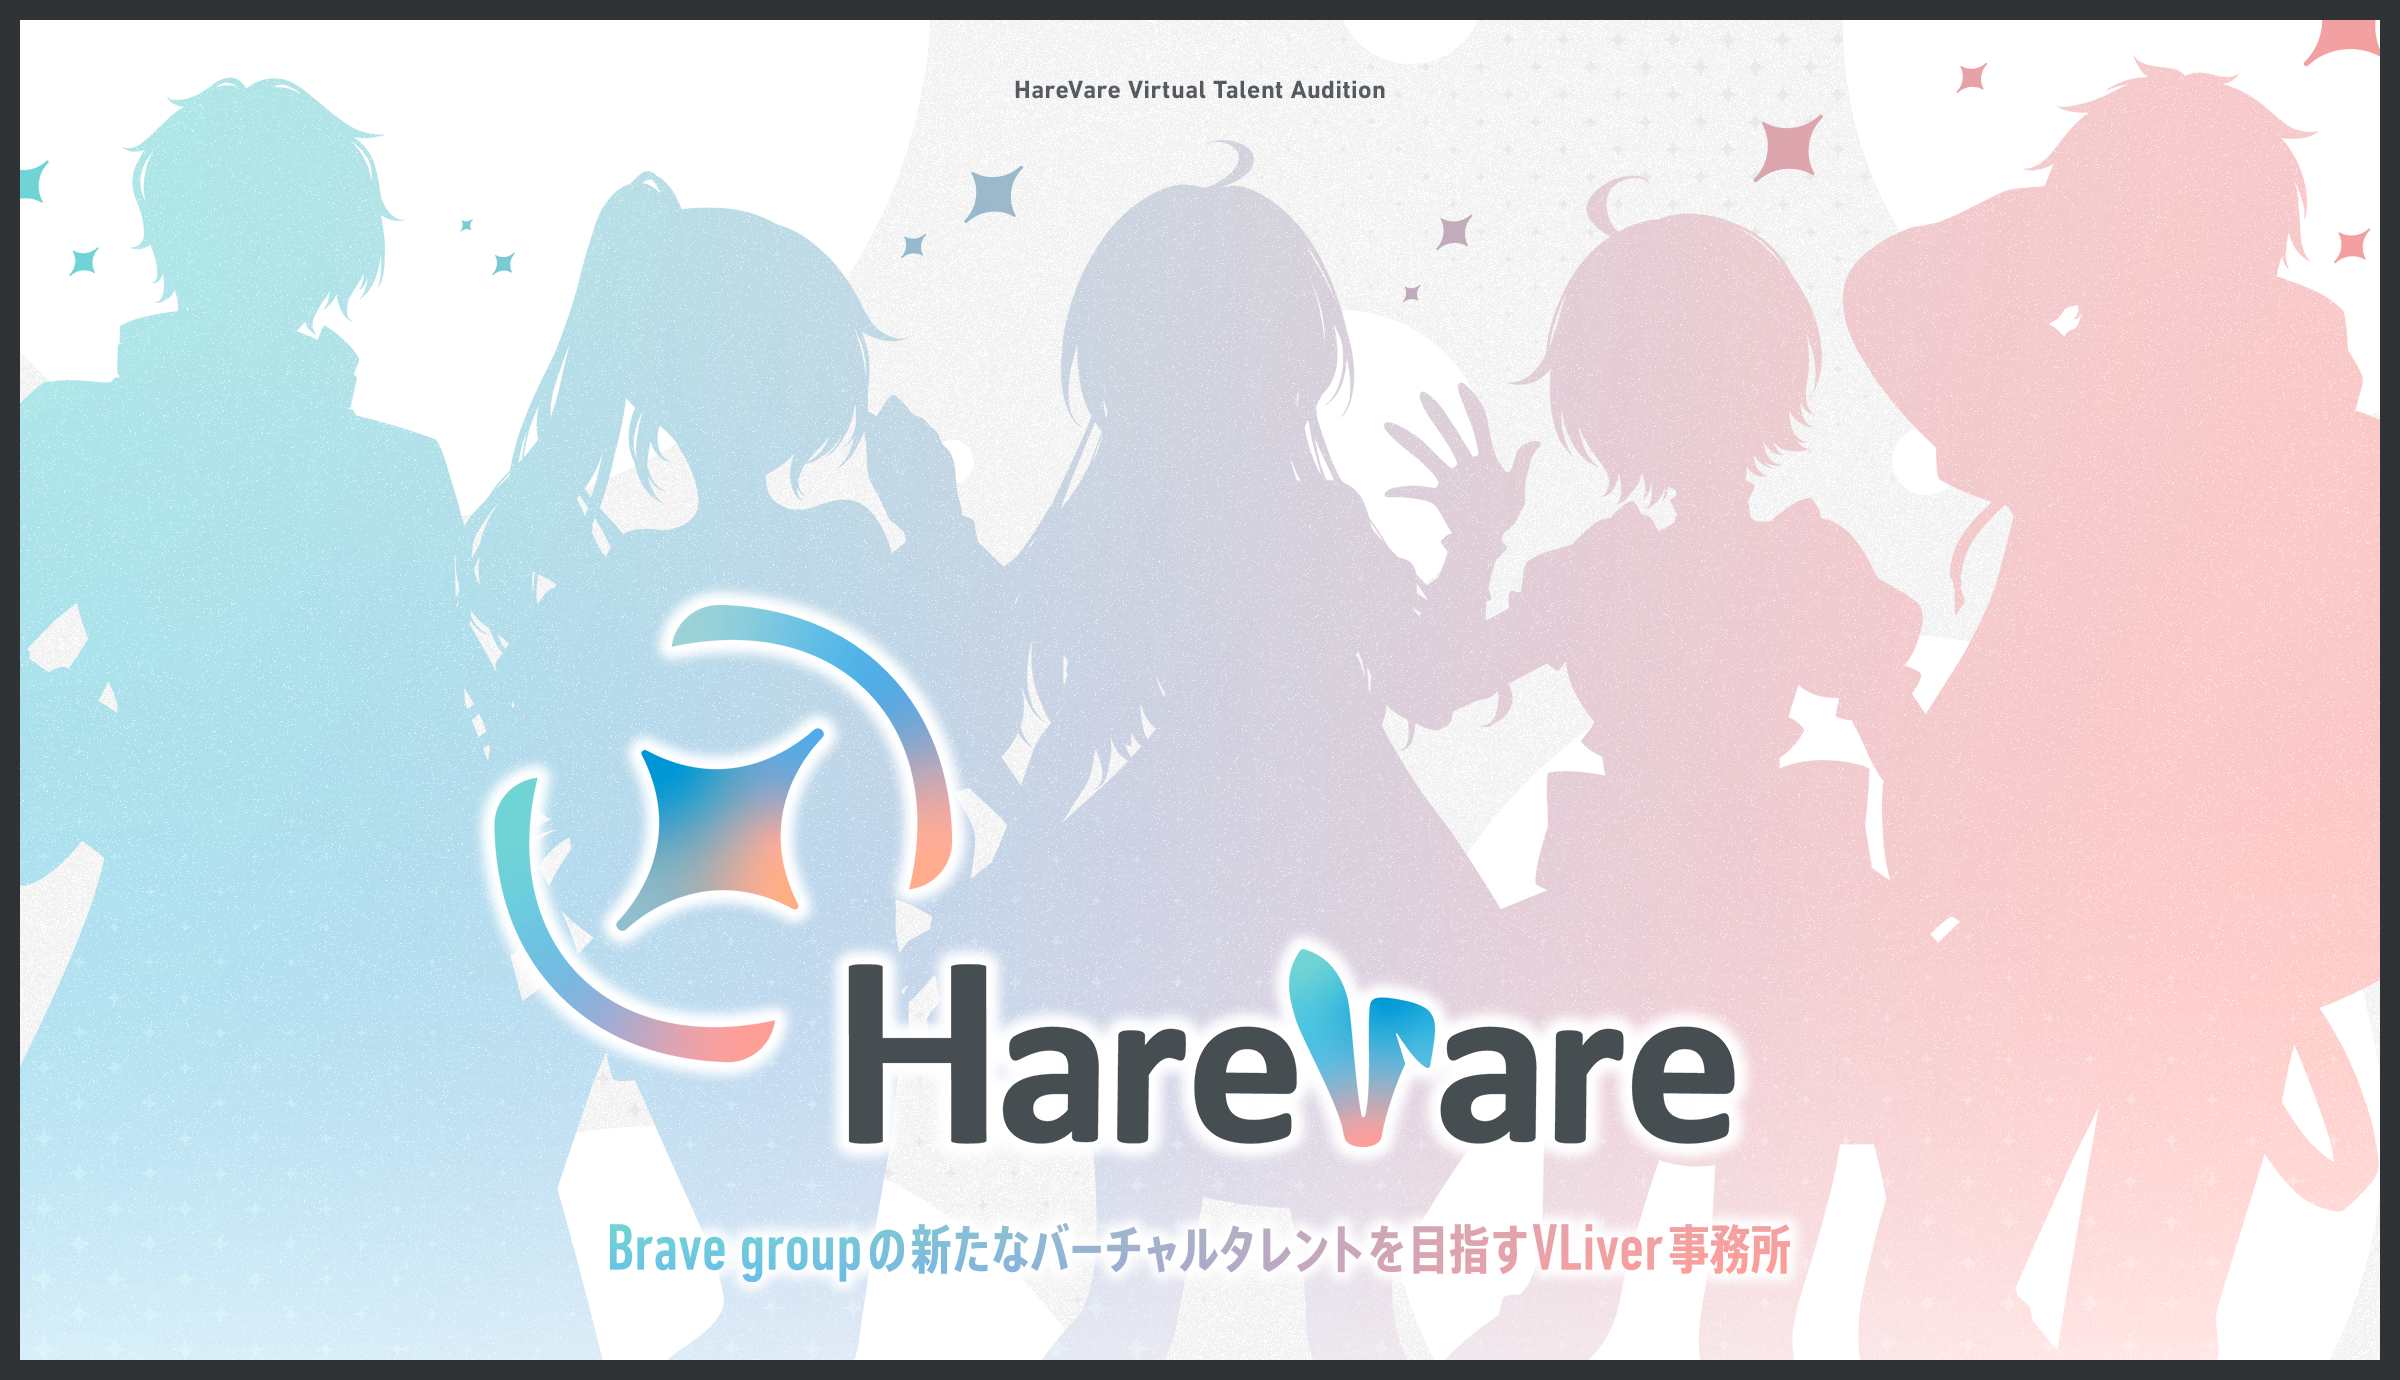 HareVare - Brave groupの新たなバーチャルタレントを目指すVLiver事務所